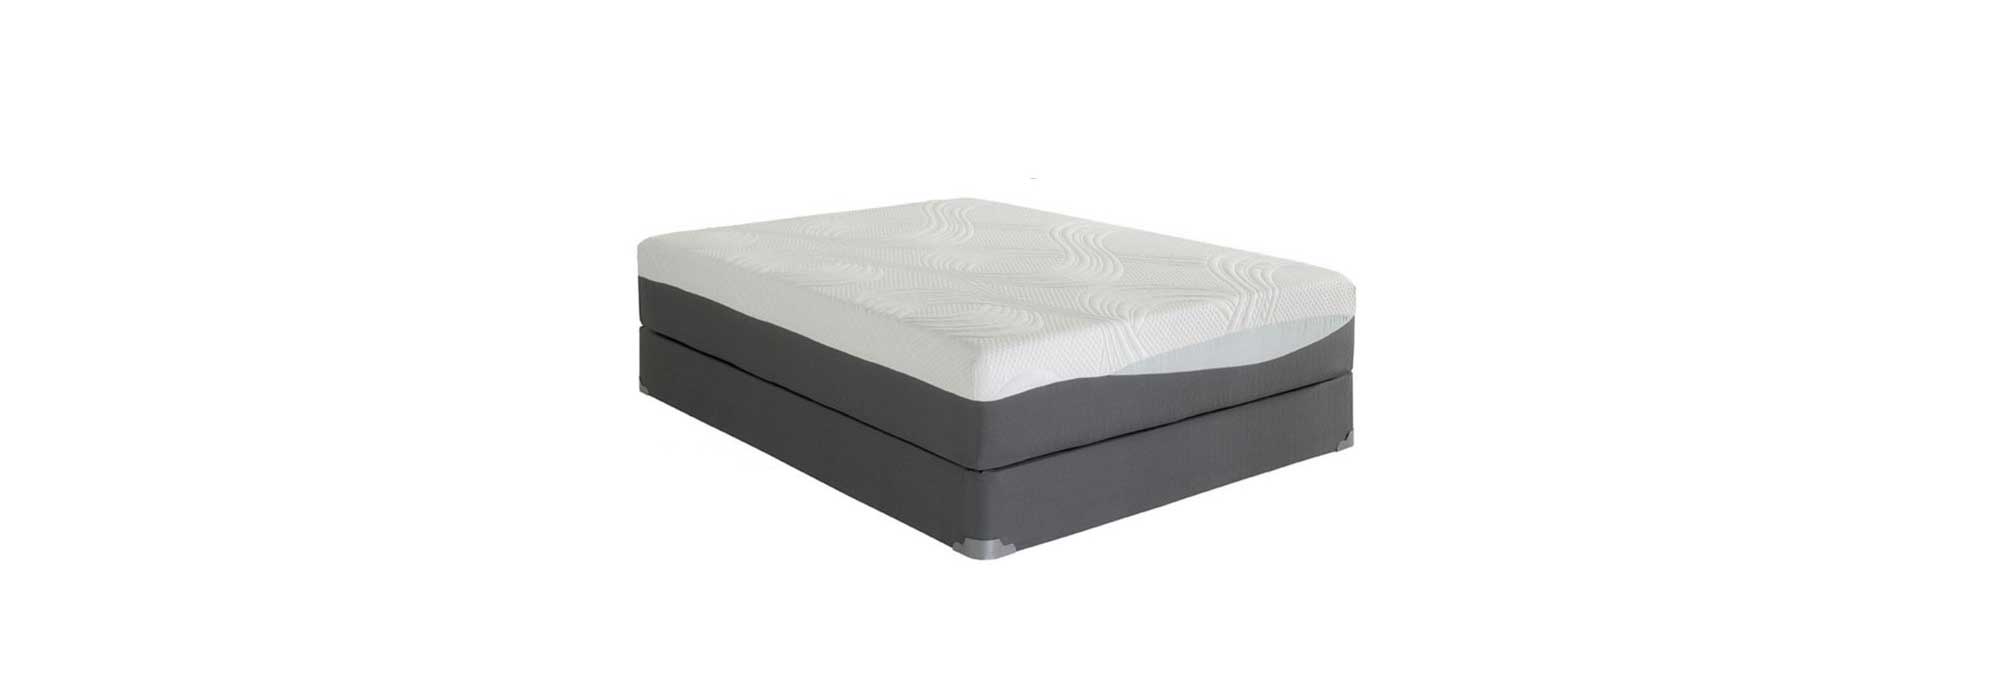 corsicana cool gel memory foam mattress